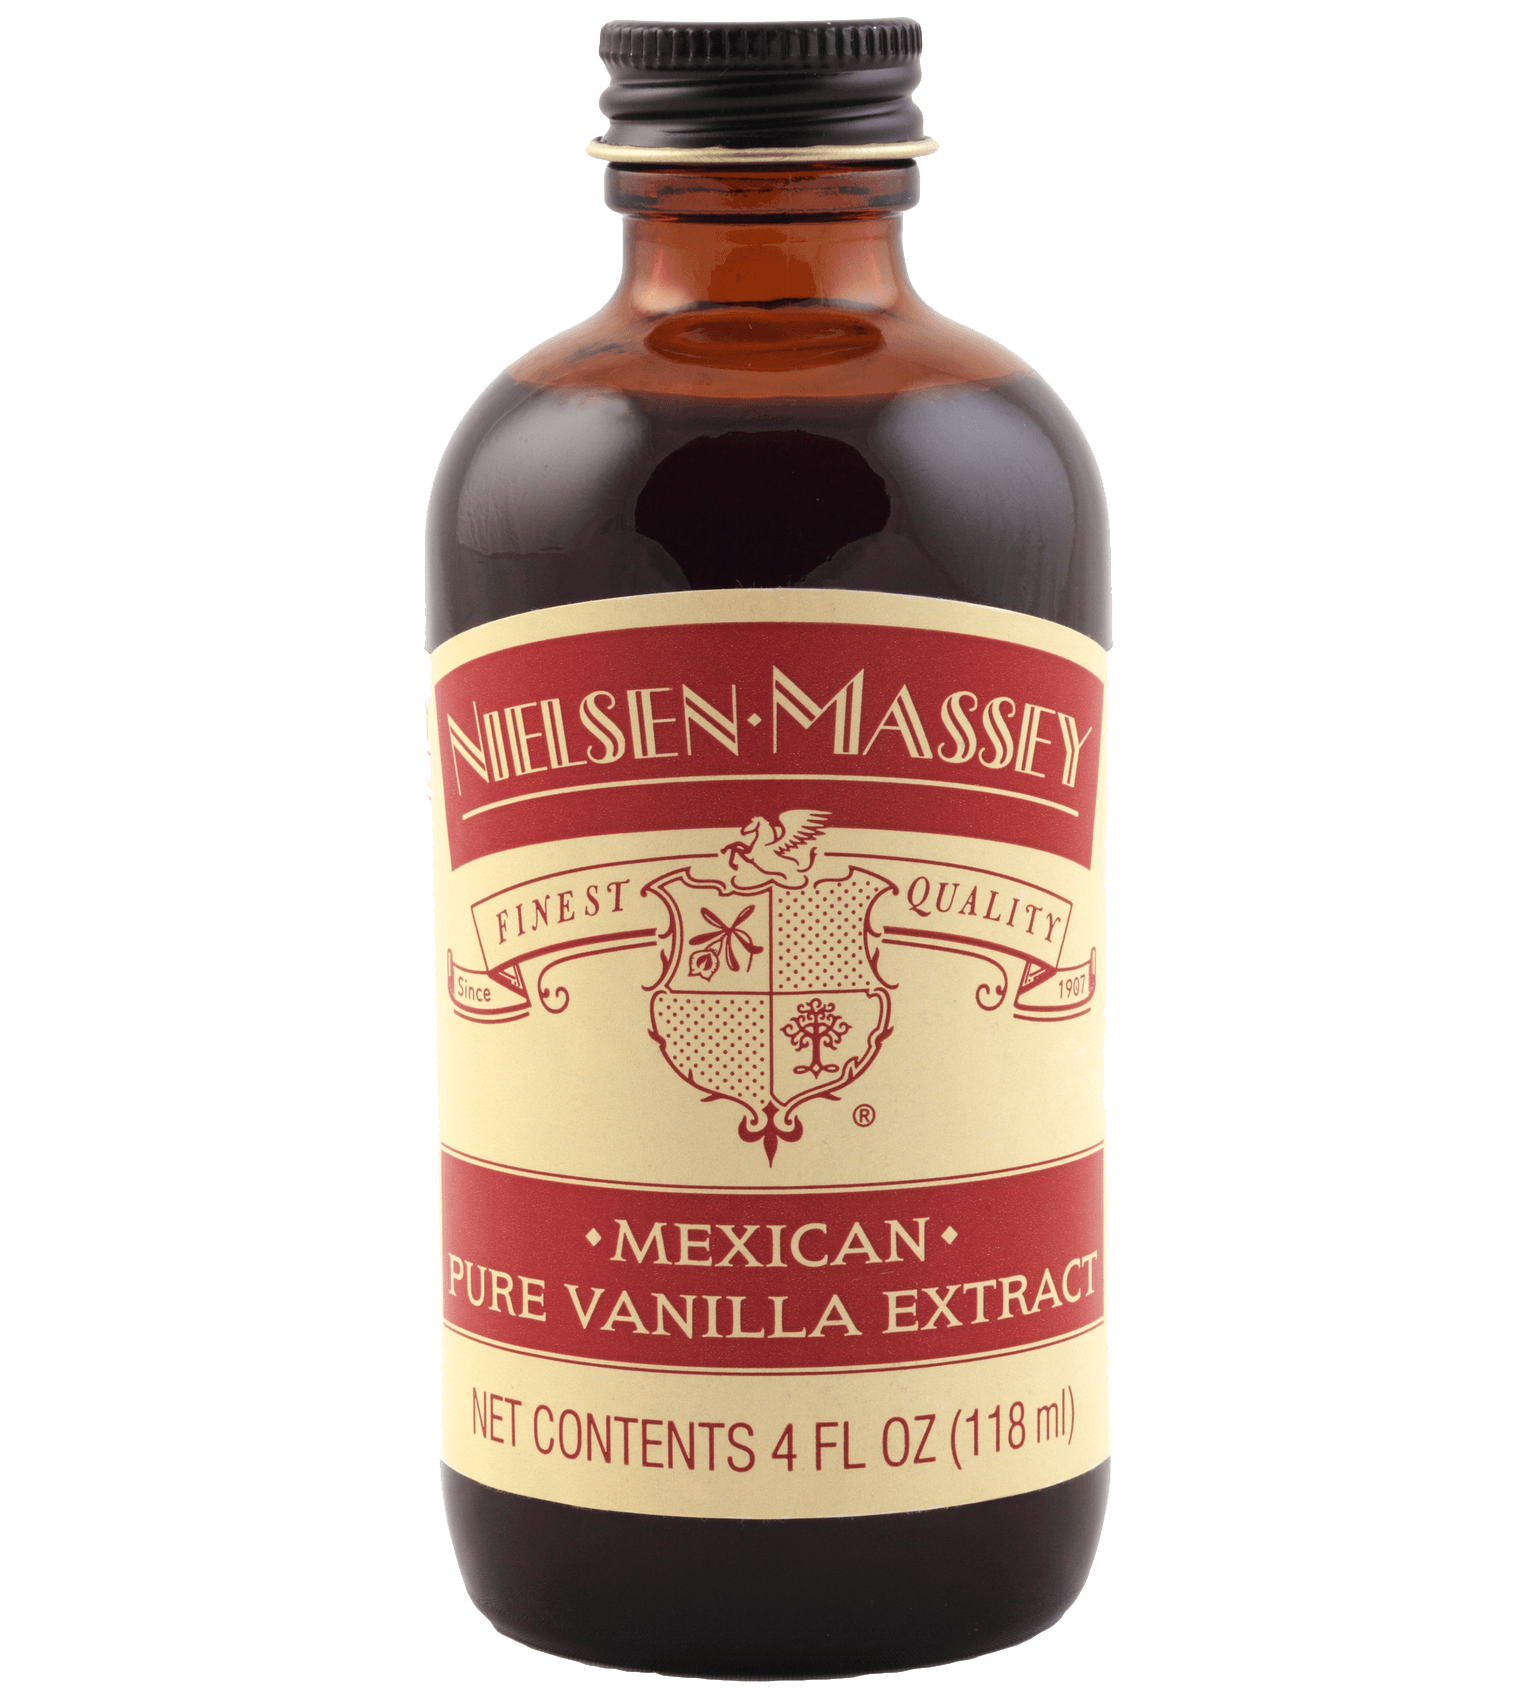 Mexican Pure Vanilla Extract Nielsen Massey Vanillas